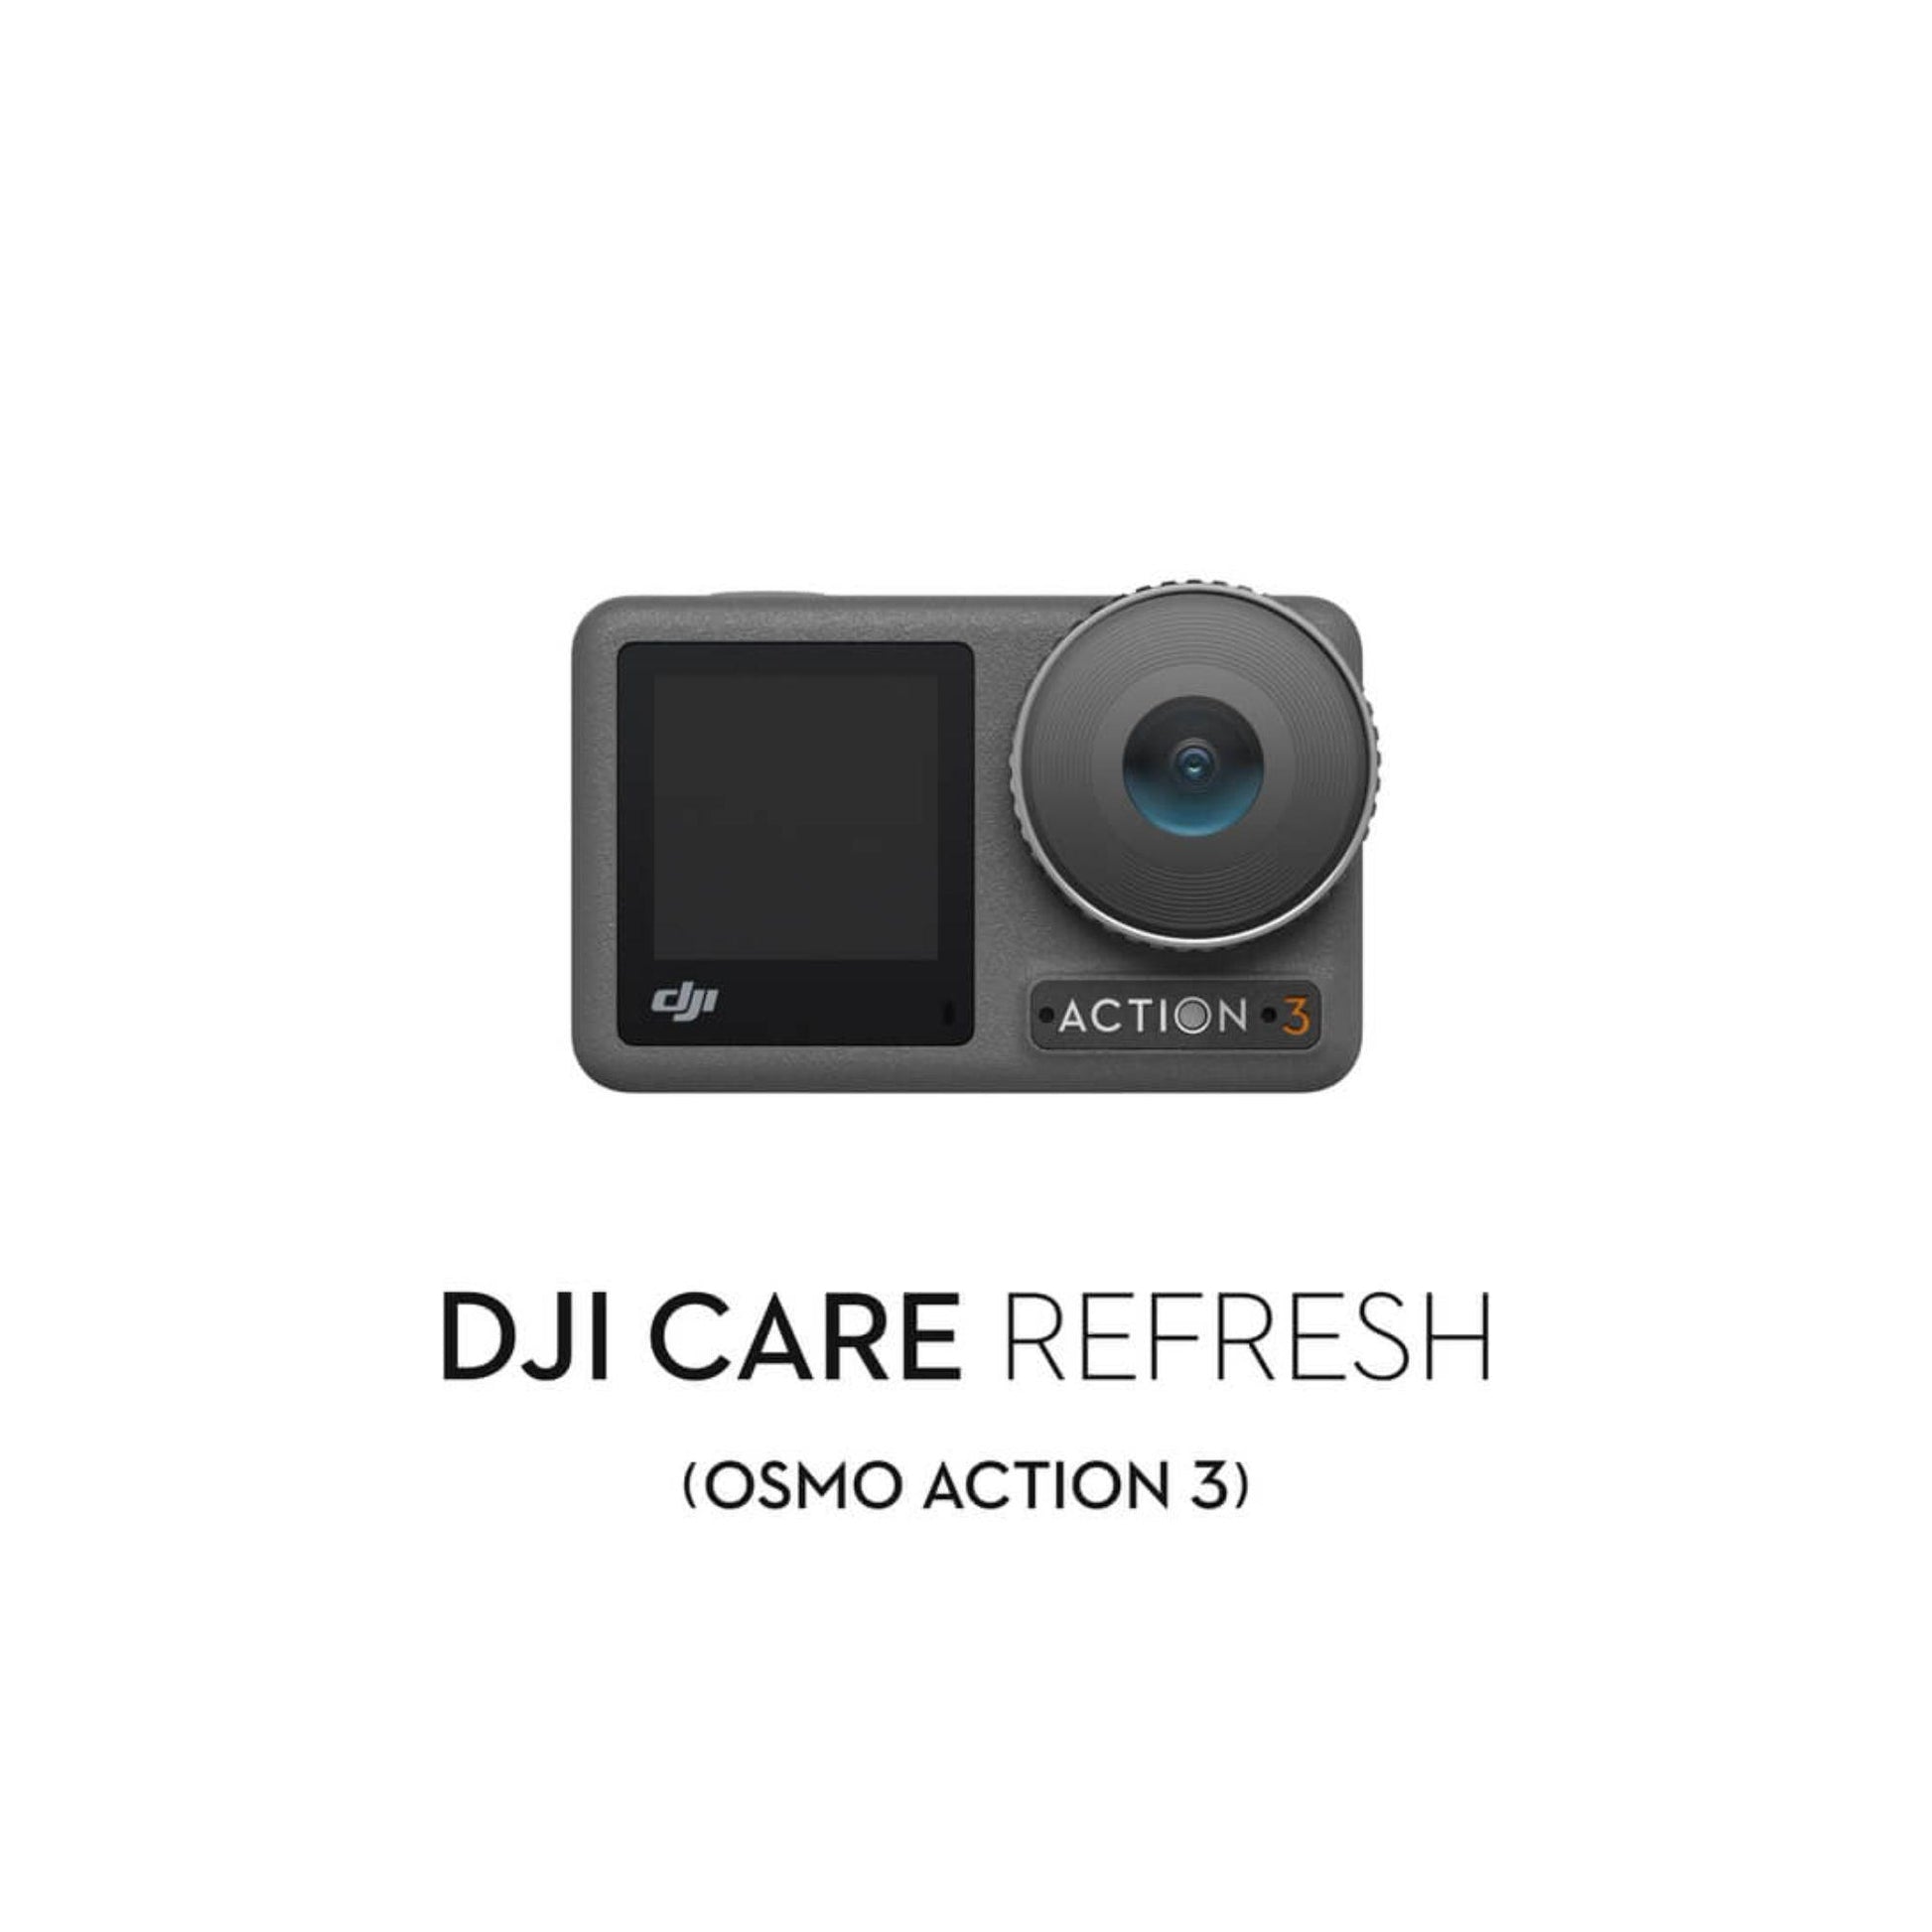 DJI Care Refresh 1-Year Plan (Osmo Action 3) - Silverlight Optics